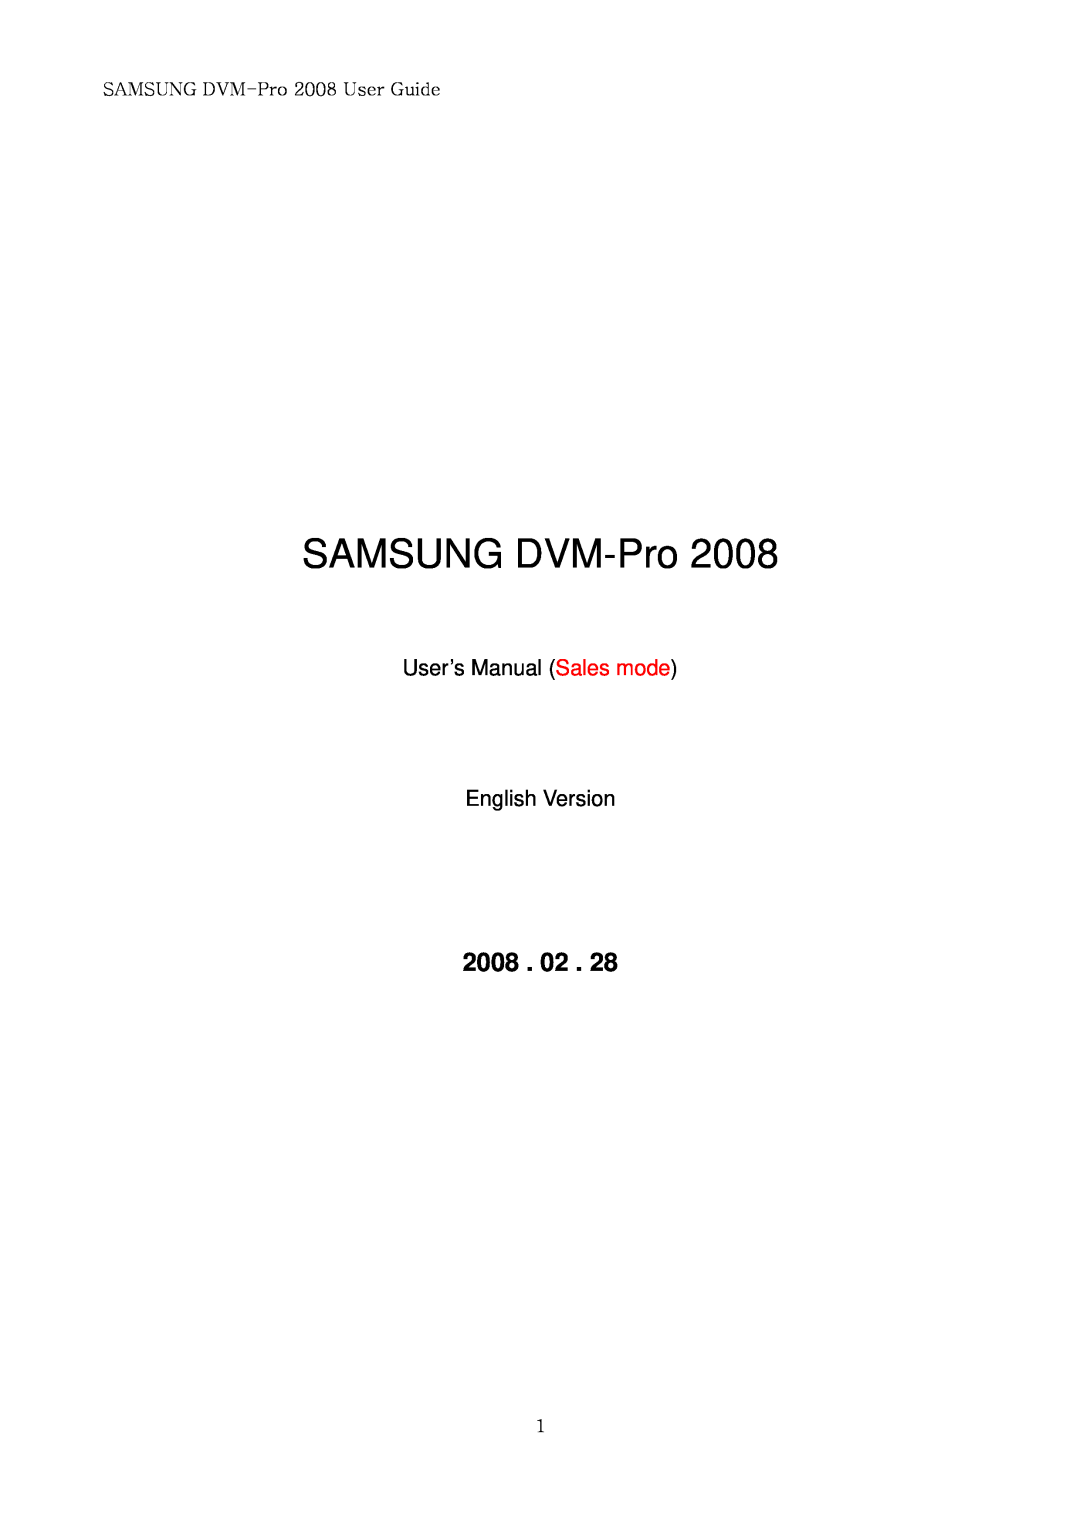 Samsung DVM-PRO 2008 user manual SAMSUNG DVM-Pro2008, 2008 . 02, User’s Manual Sales mode English Version 